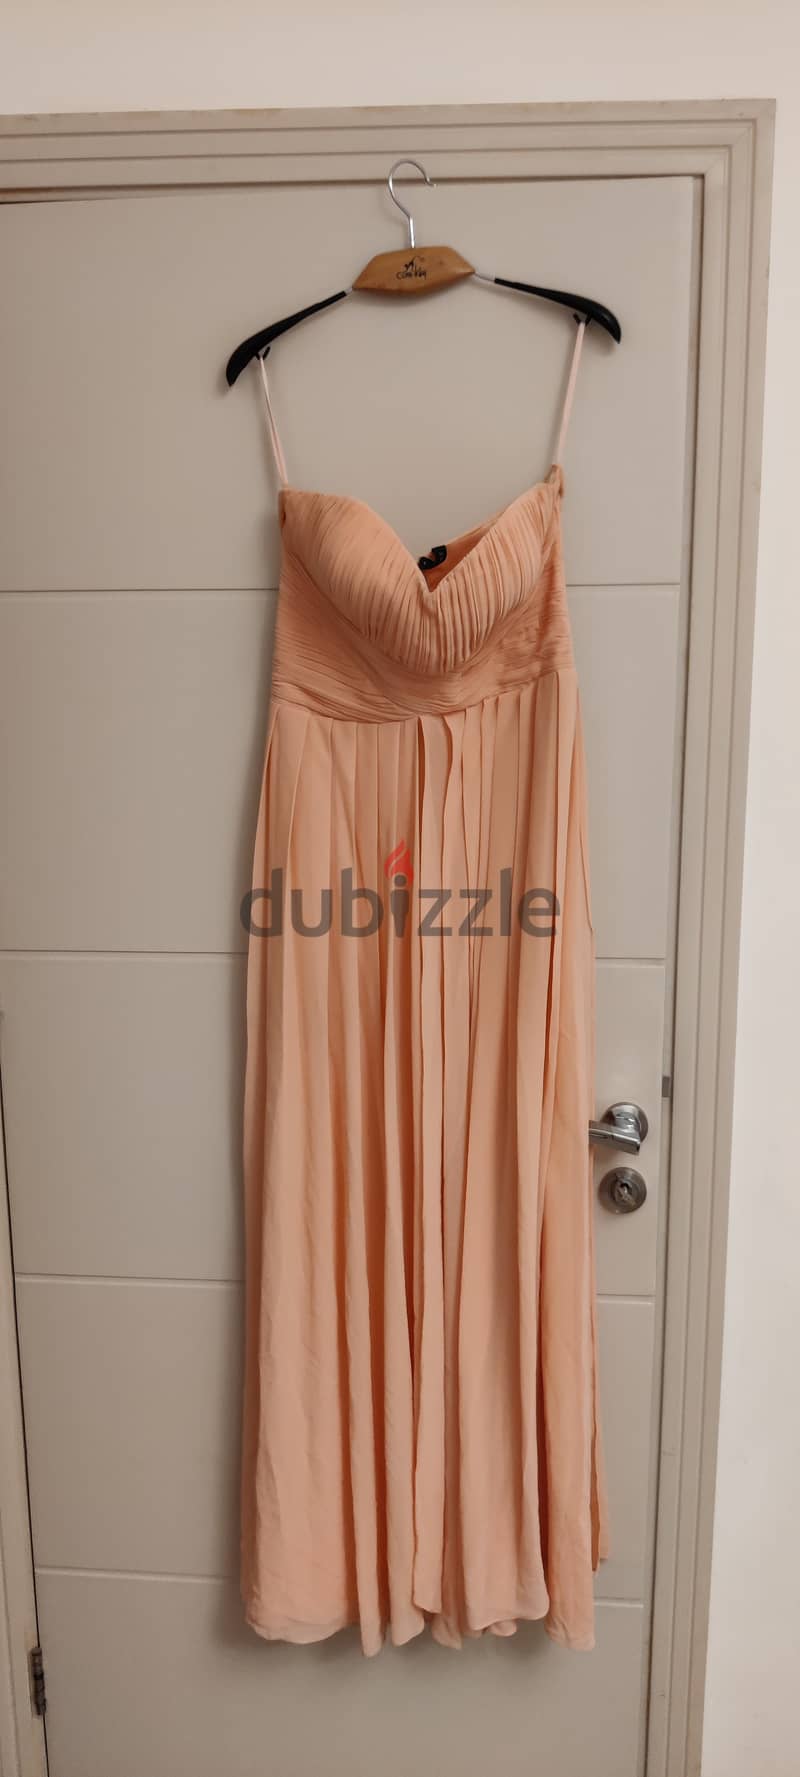 Peach colored dress Strapless silhouette 2